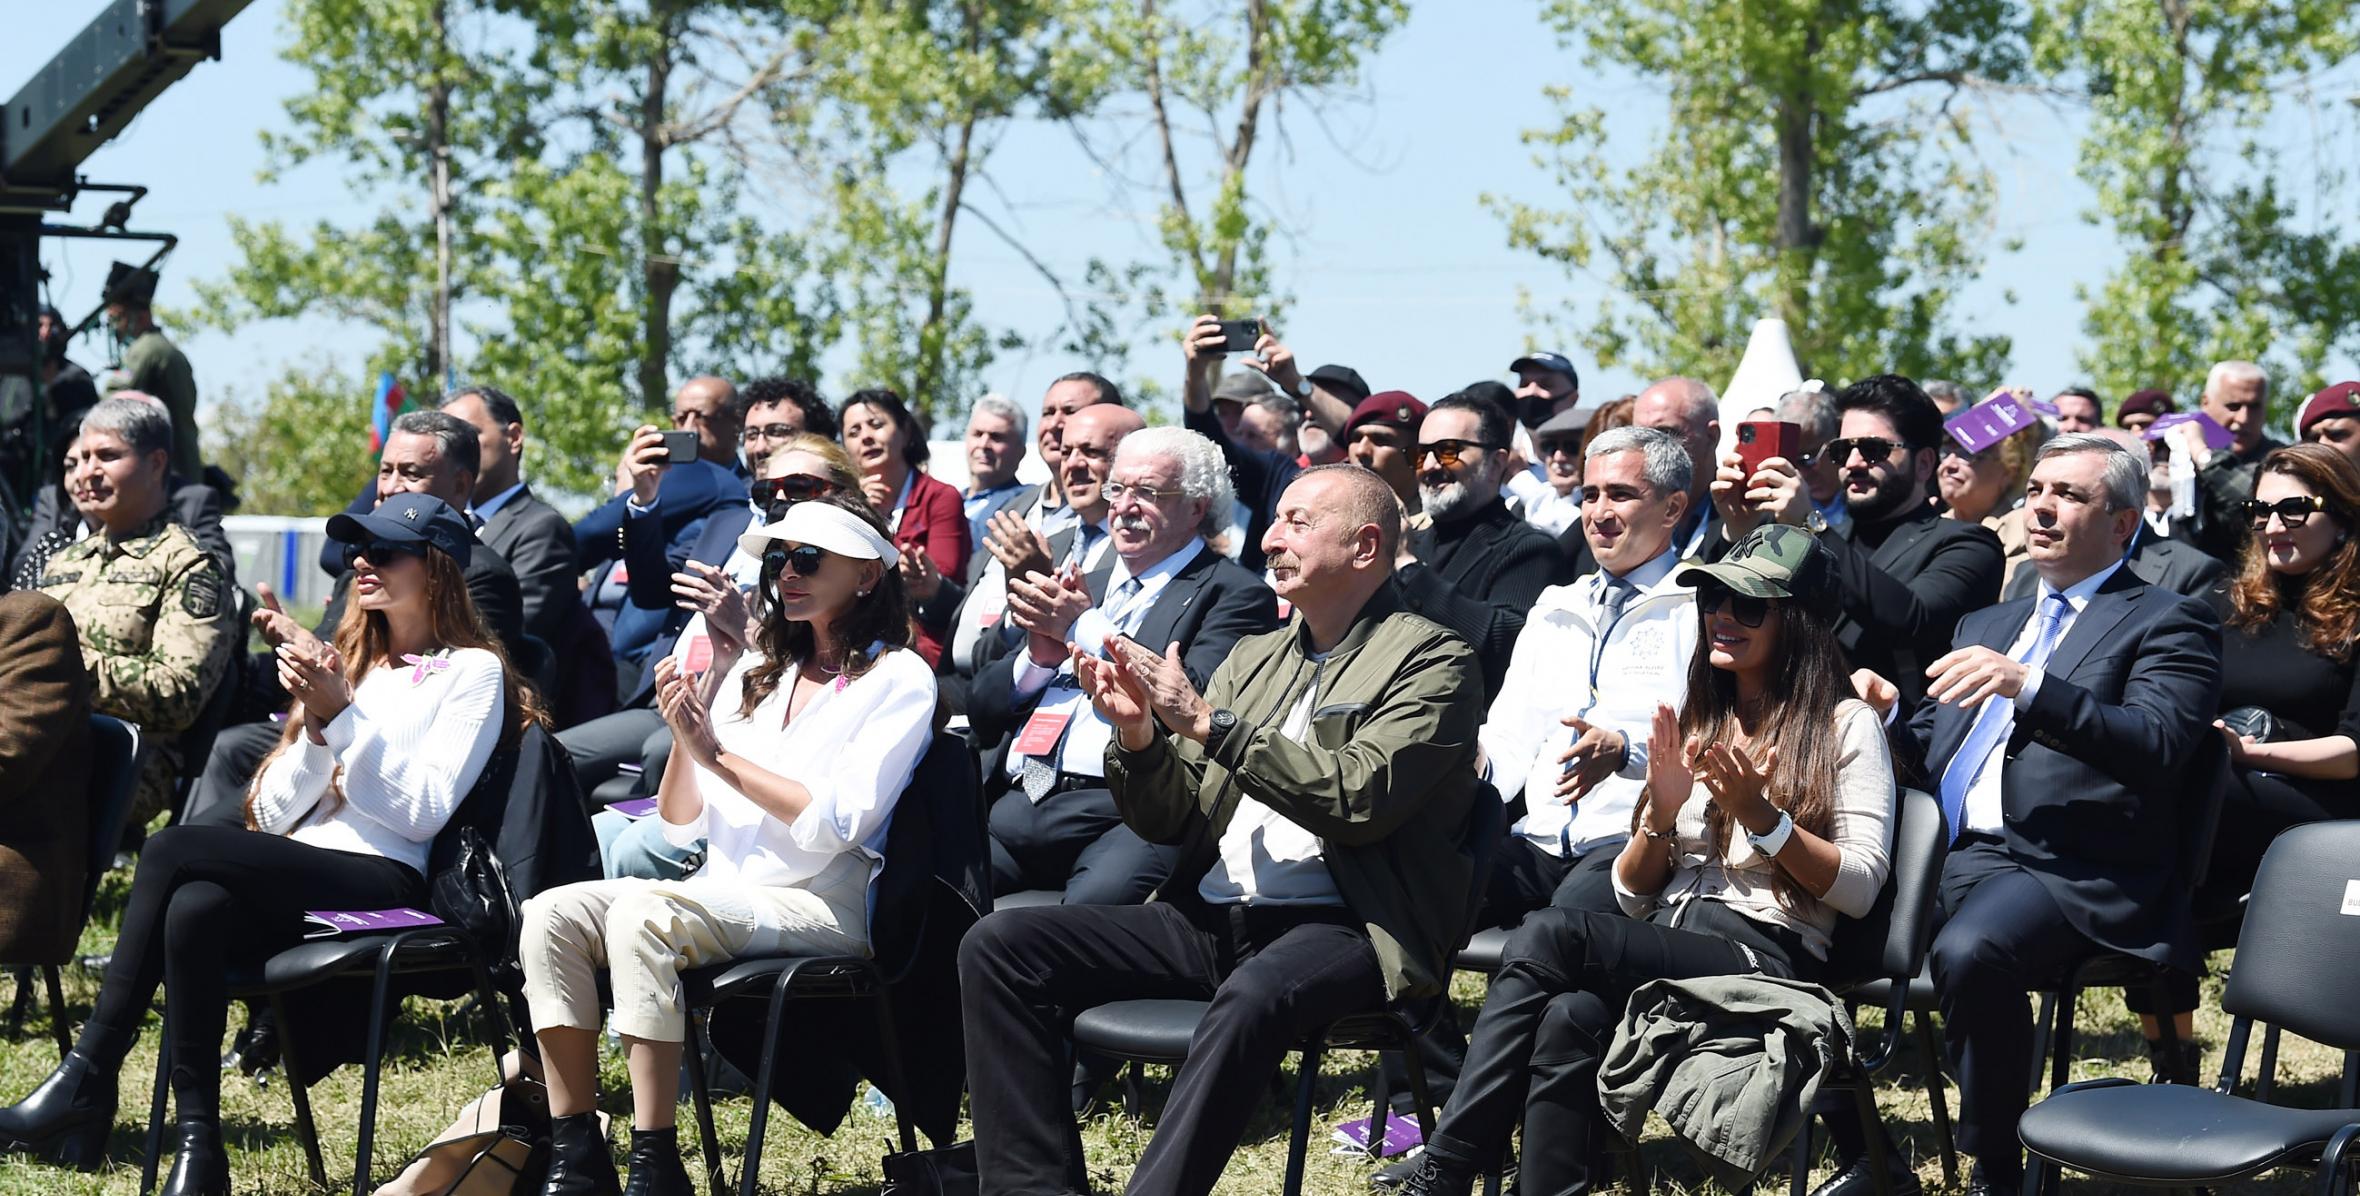 Ilham Aliyev and First Lady Mehriban Aliyeva attended opening of “Kharibulbul” Festival in Shusha